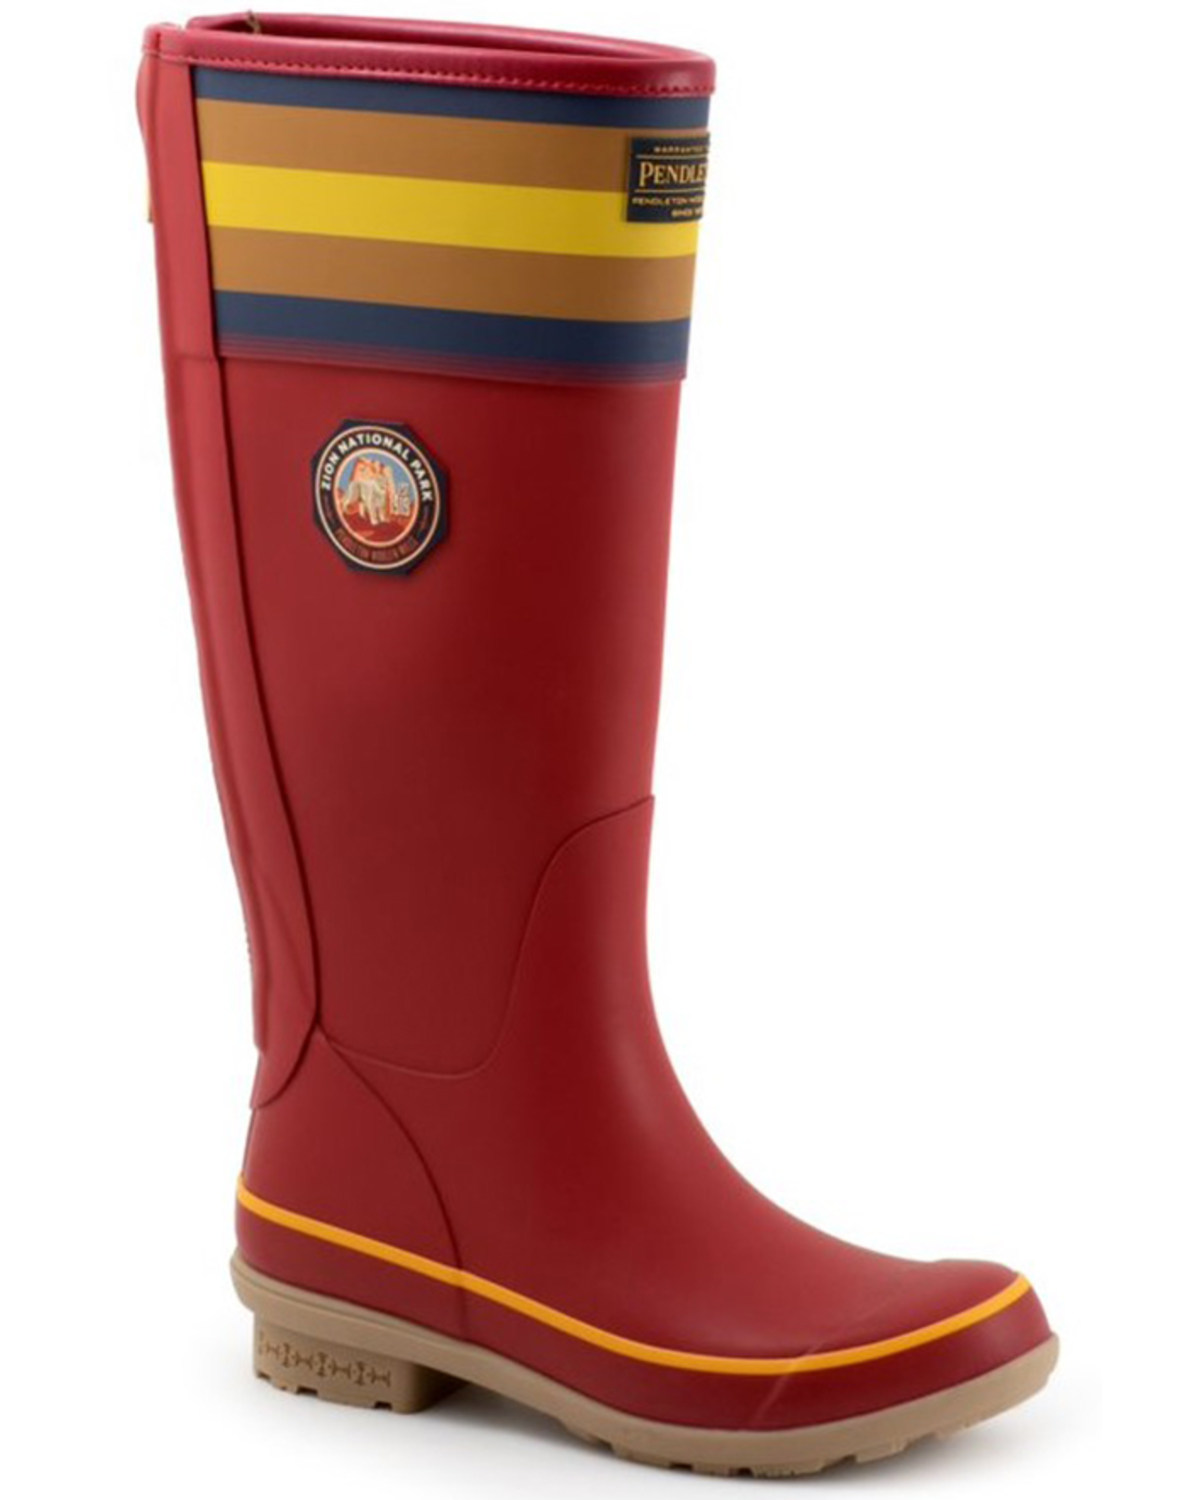 Pendleton Women's National Park Tall Rain Boots - Round Toe